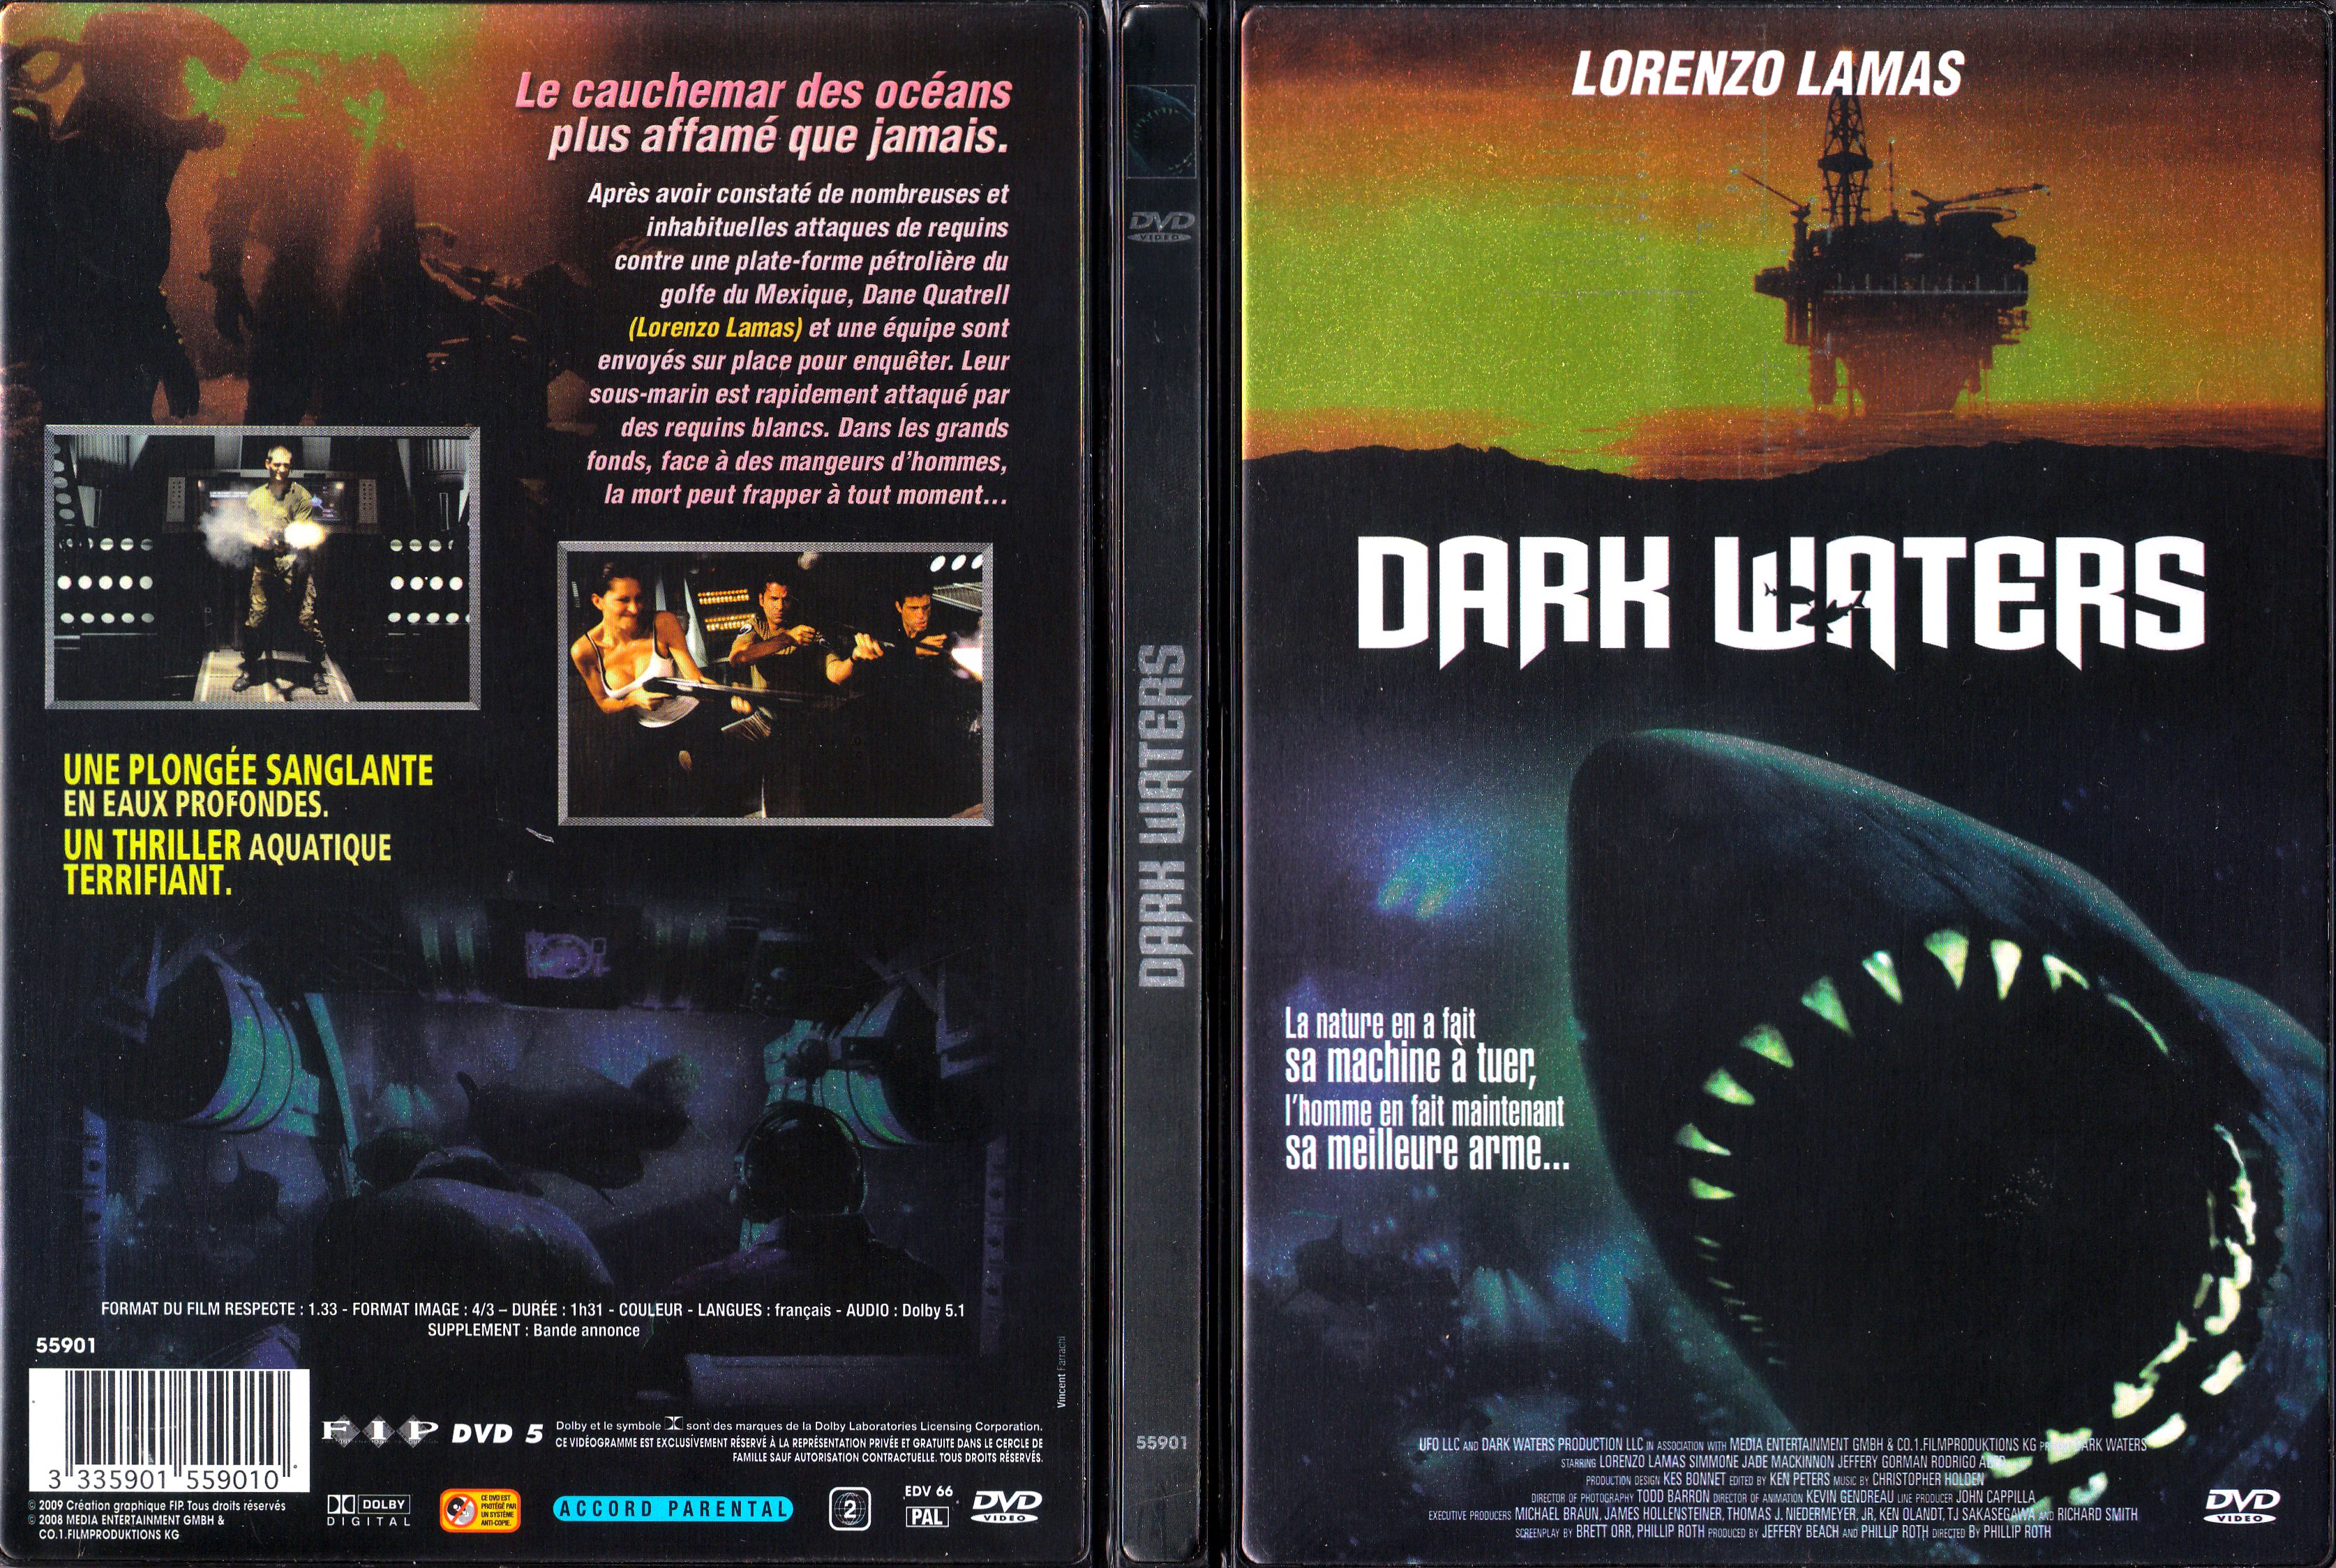 Jaquette DVD Dark waters (Lorenzo Lamas)